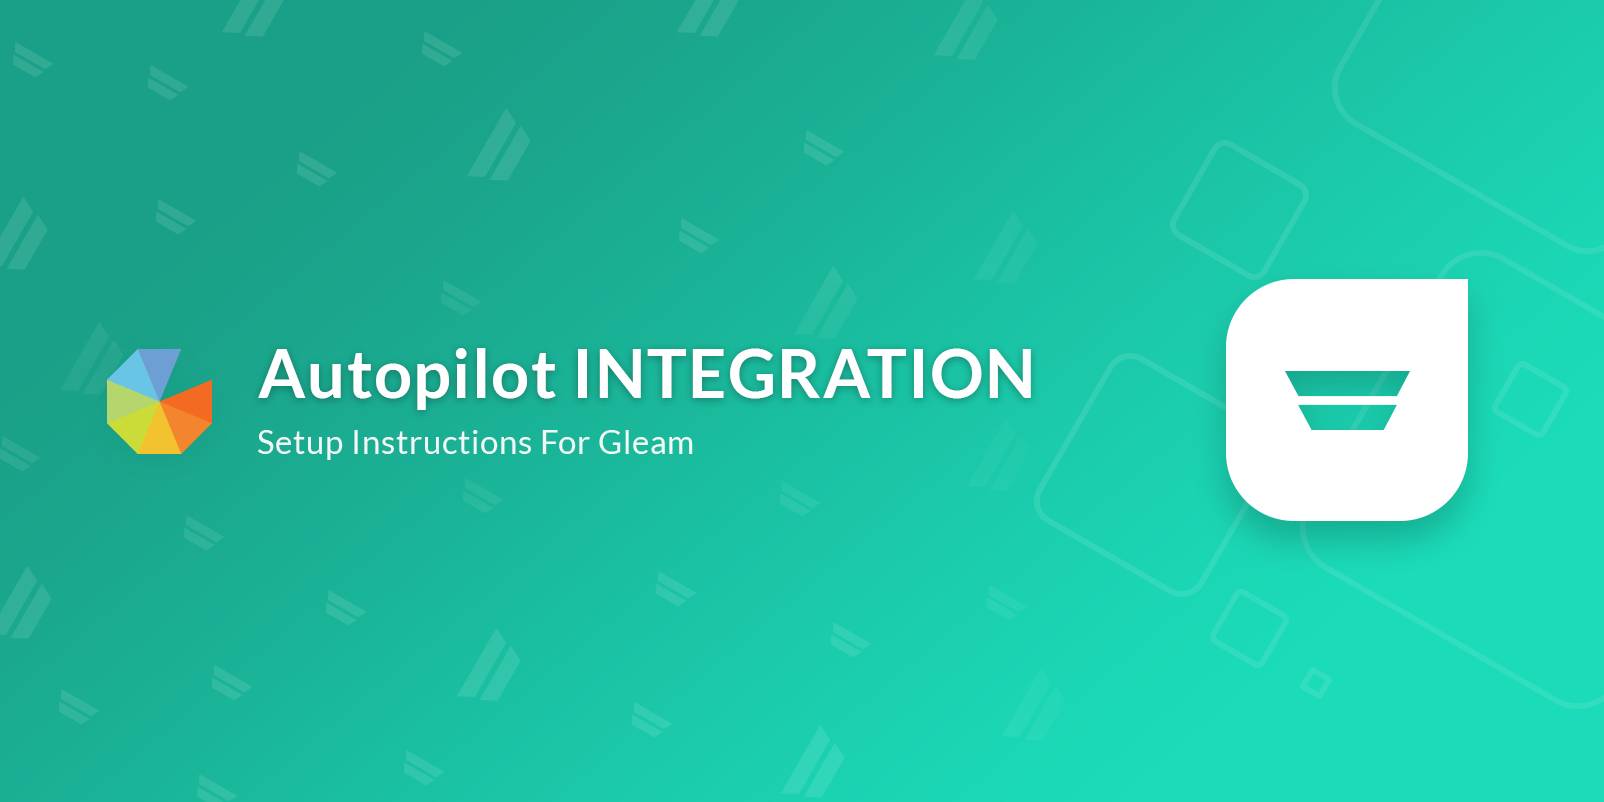 Autopilot Intergration setup intructions for Gleam